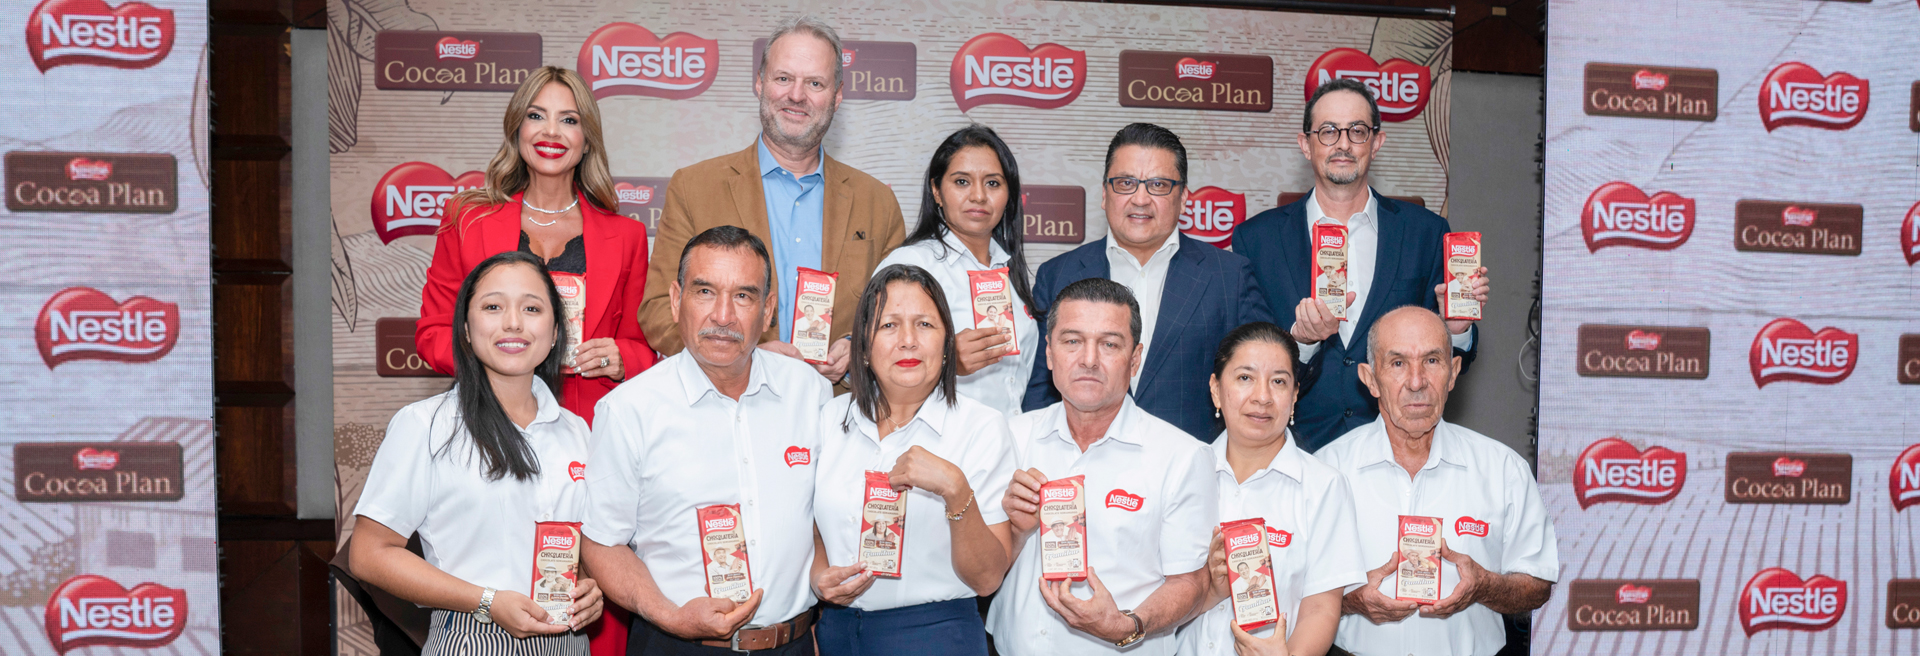 Nestlé Lanza un Homenaje a Los Cacaoteros Ecuatorianos 